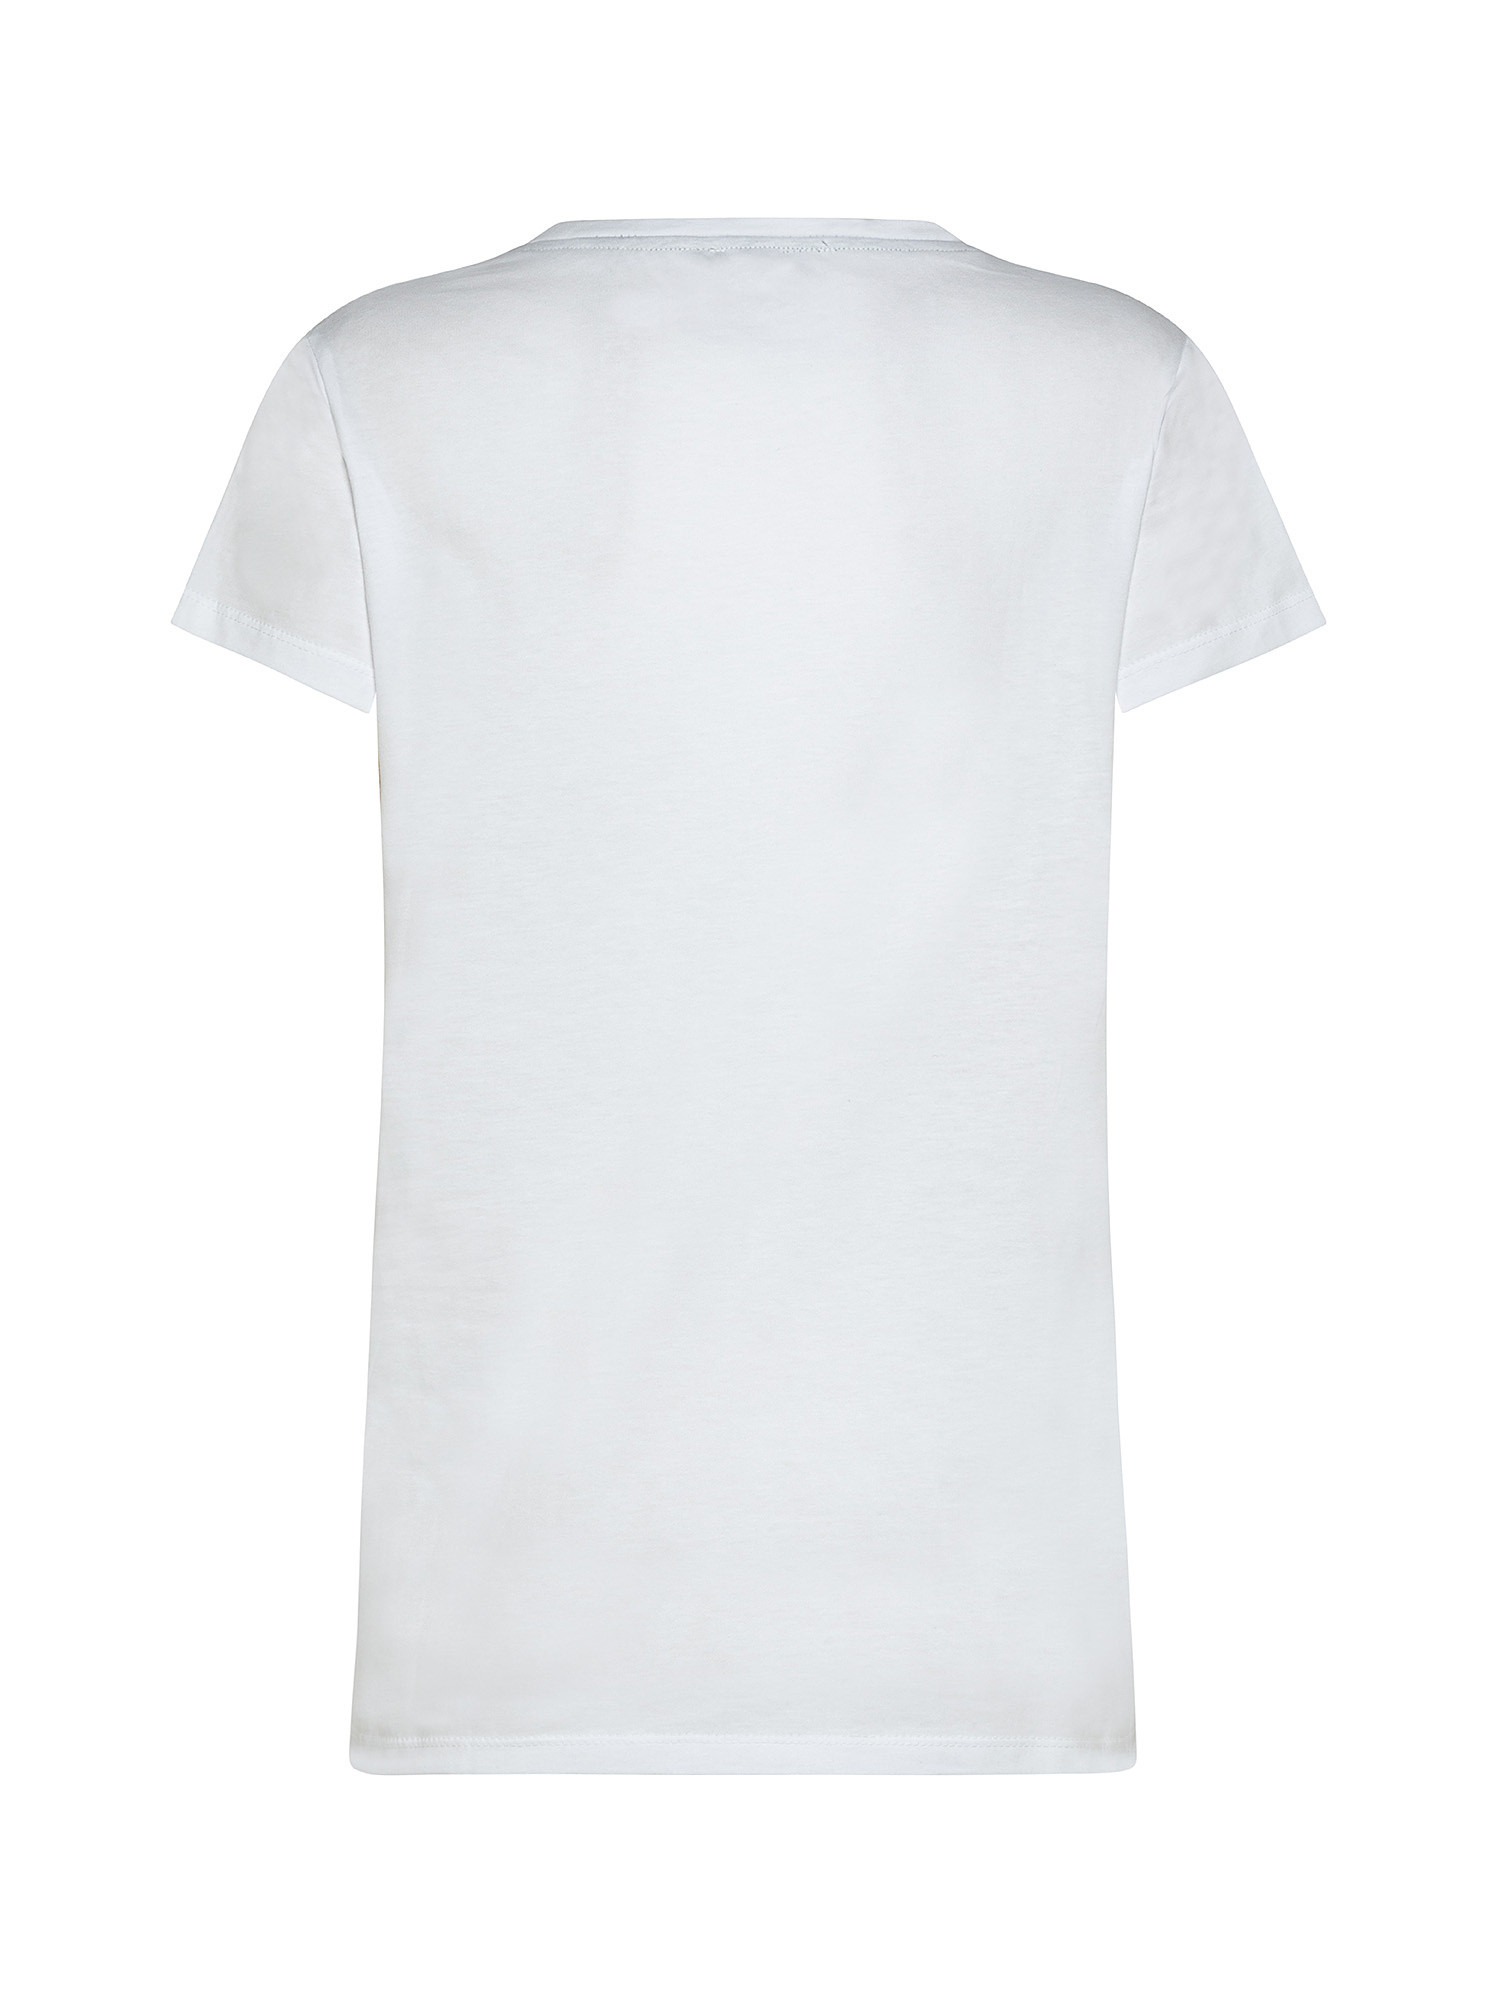 T-shirt basic puro cotone tinta unita, Bianco, large image number 1